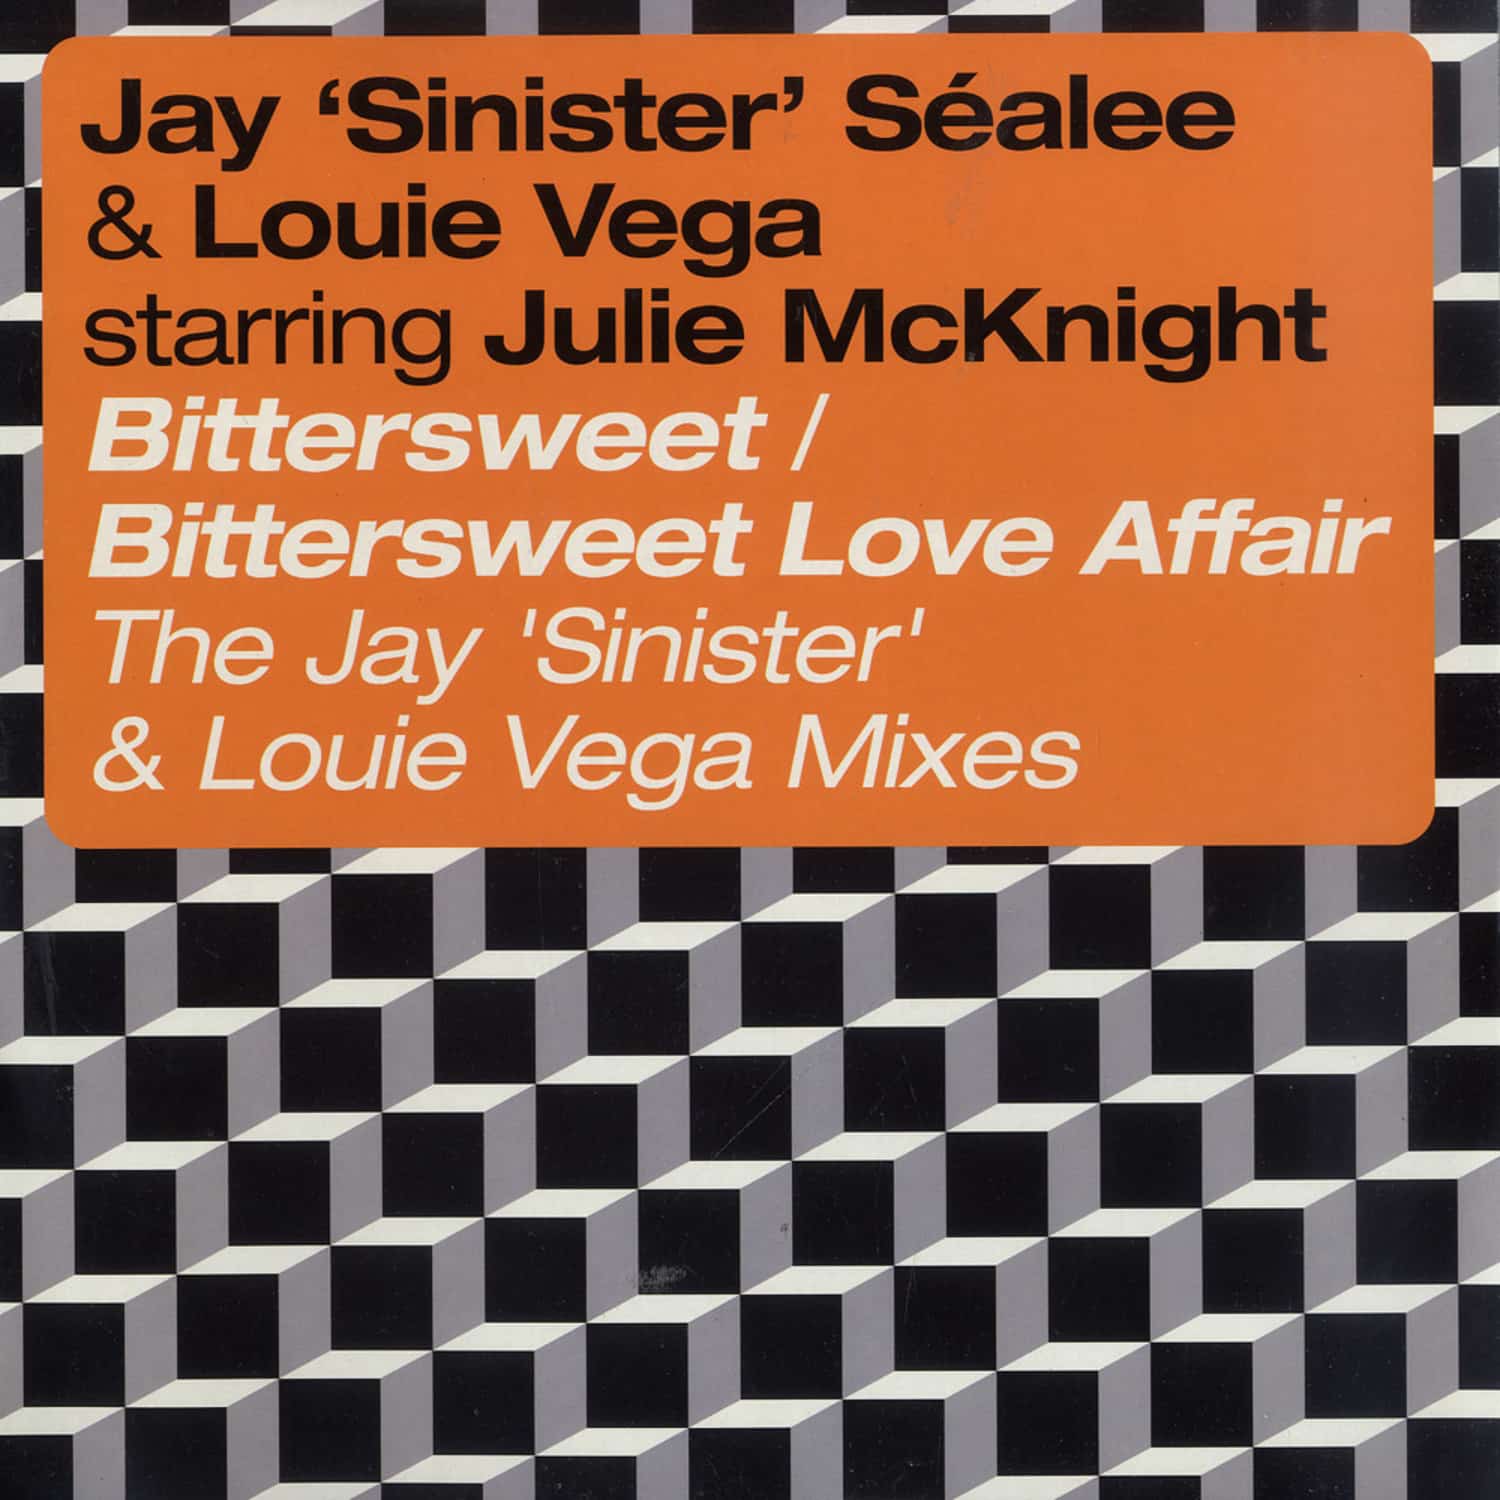 Jay Sinister Sealee & Louie Vega starring Julie McKnight - BITTERSWEET